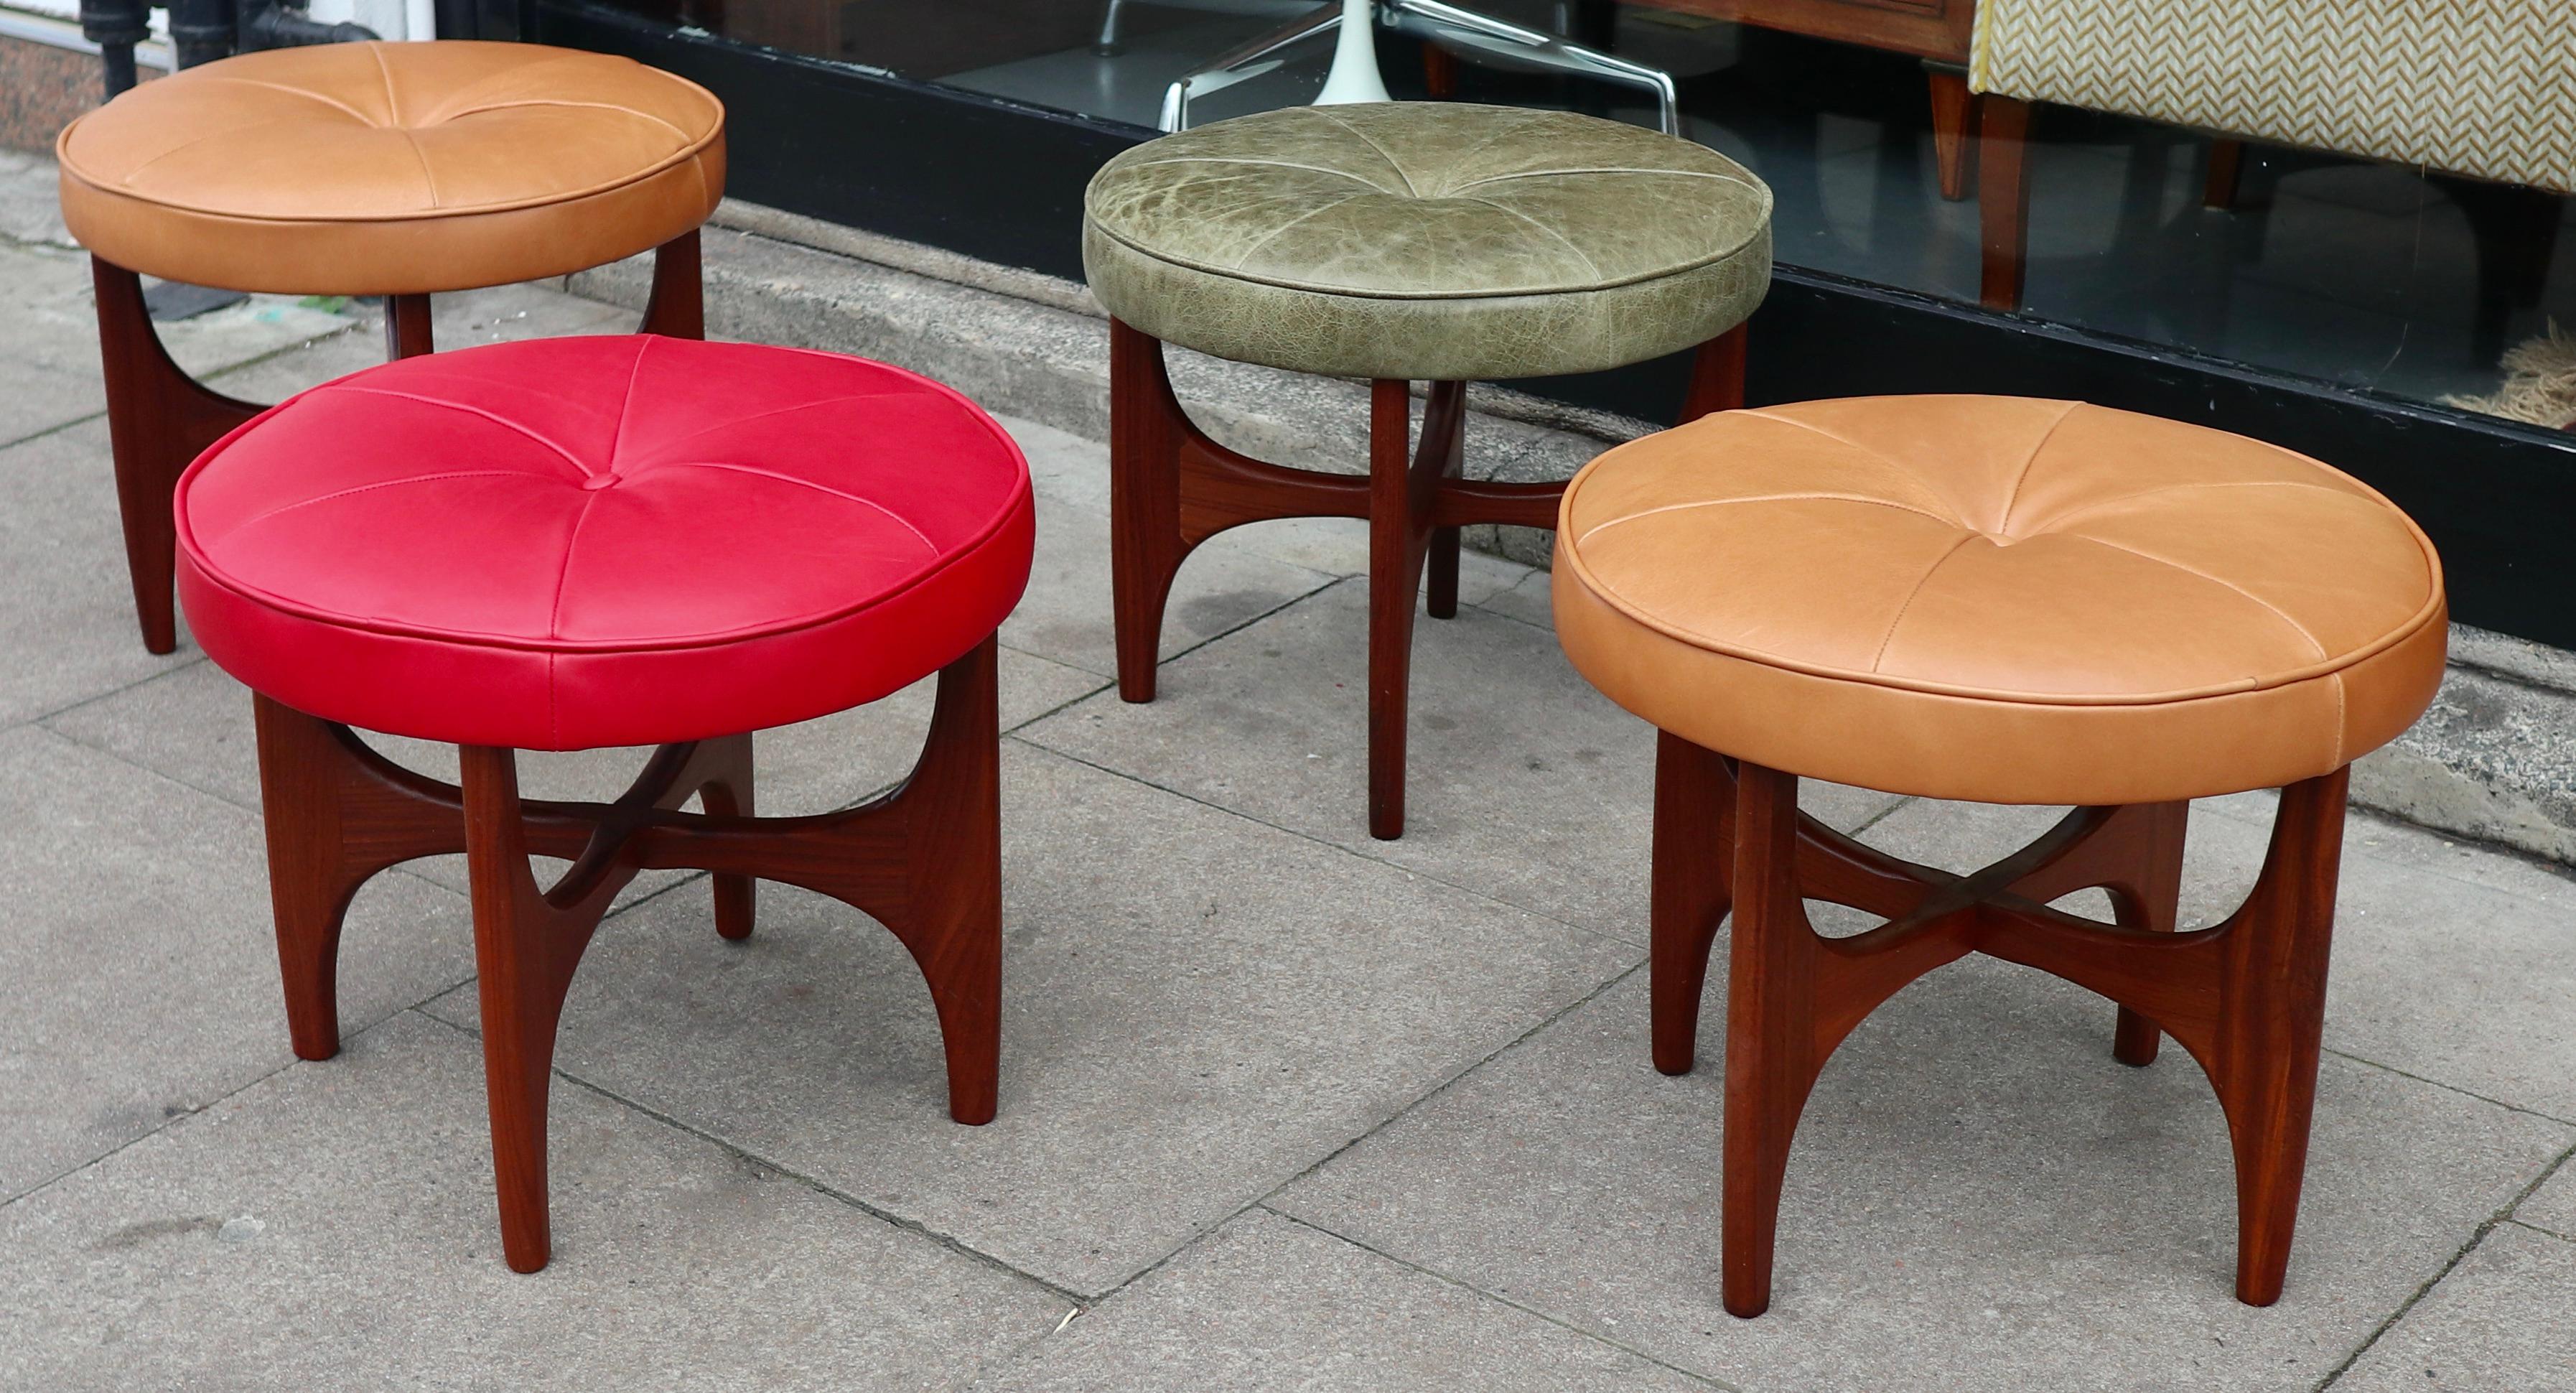 1970s English G-plan Teak based leather/cloth footstool designed by Kofod larsen For Sale 7